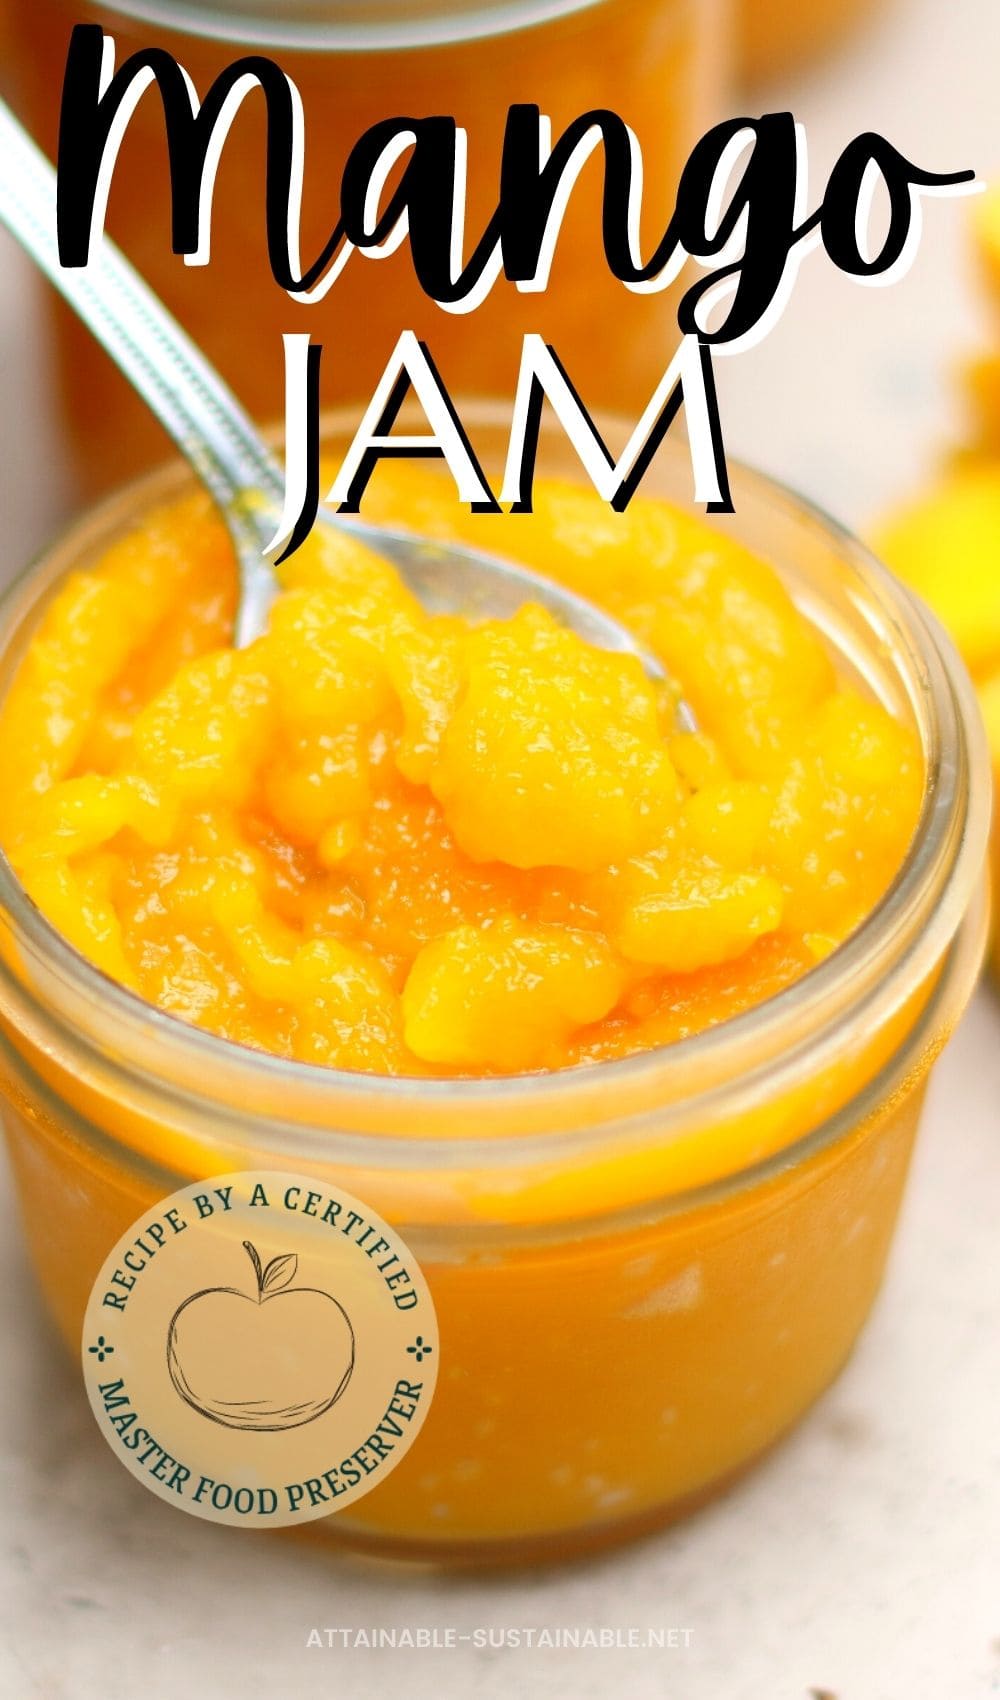 mango jam business plan pdf